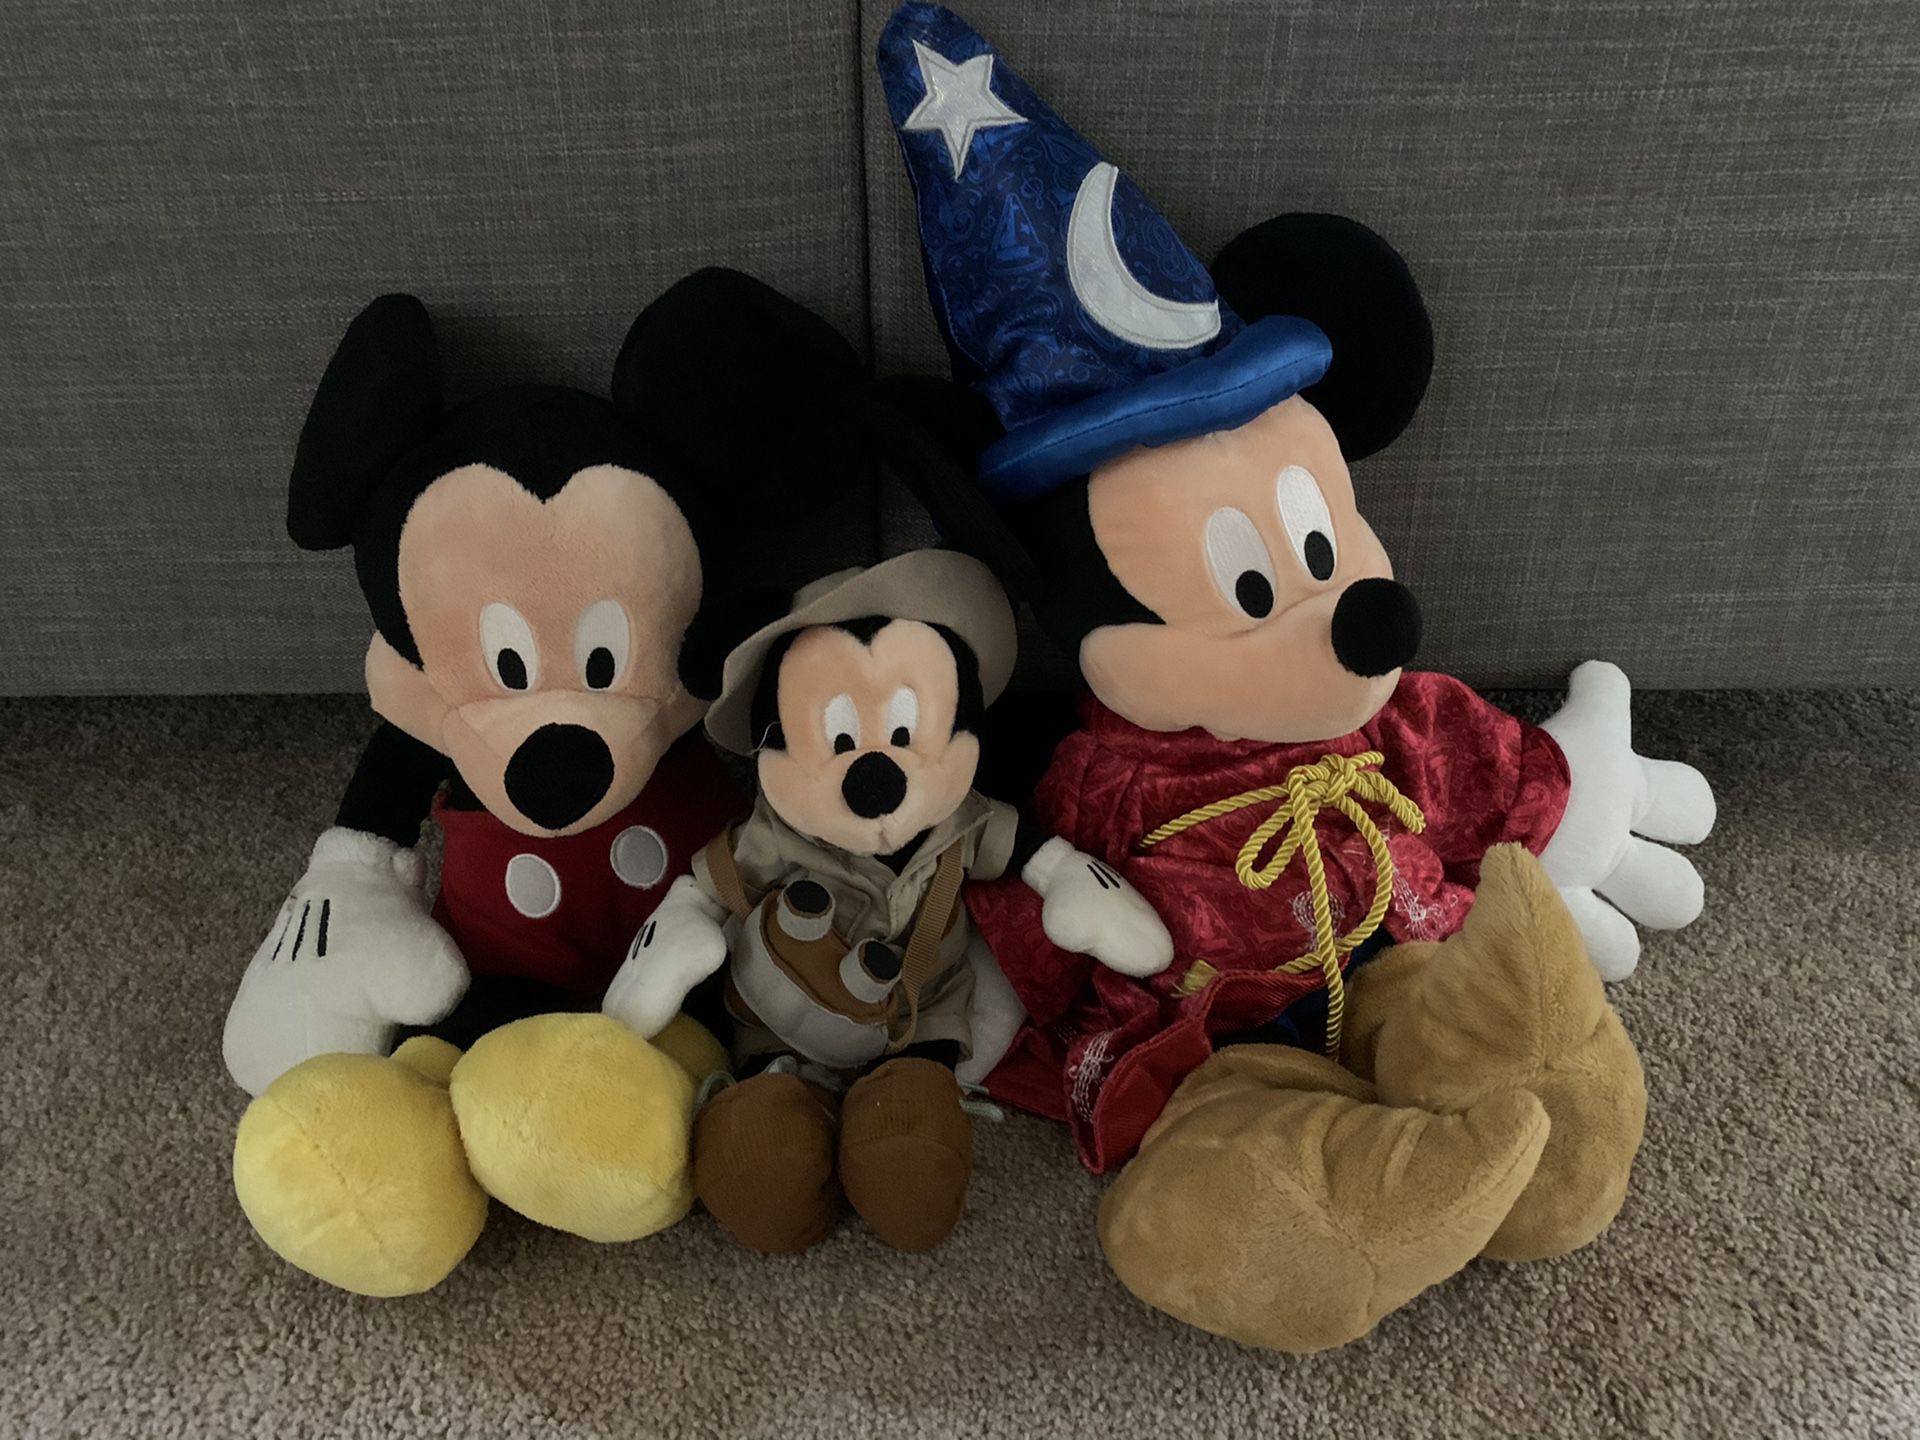 Mickey plushies